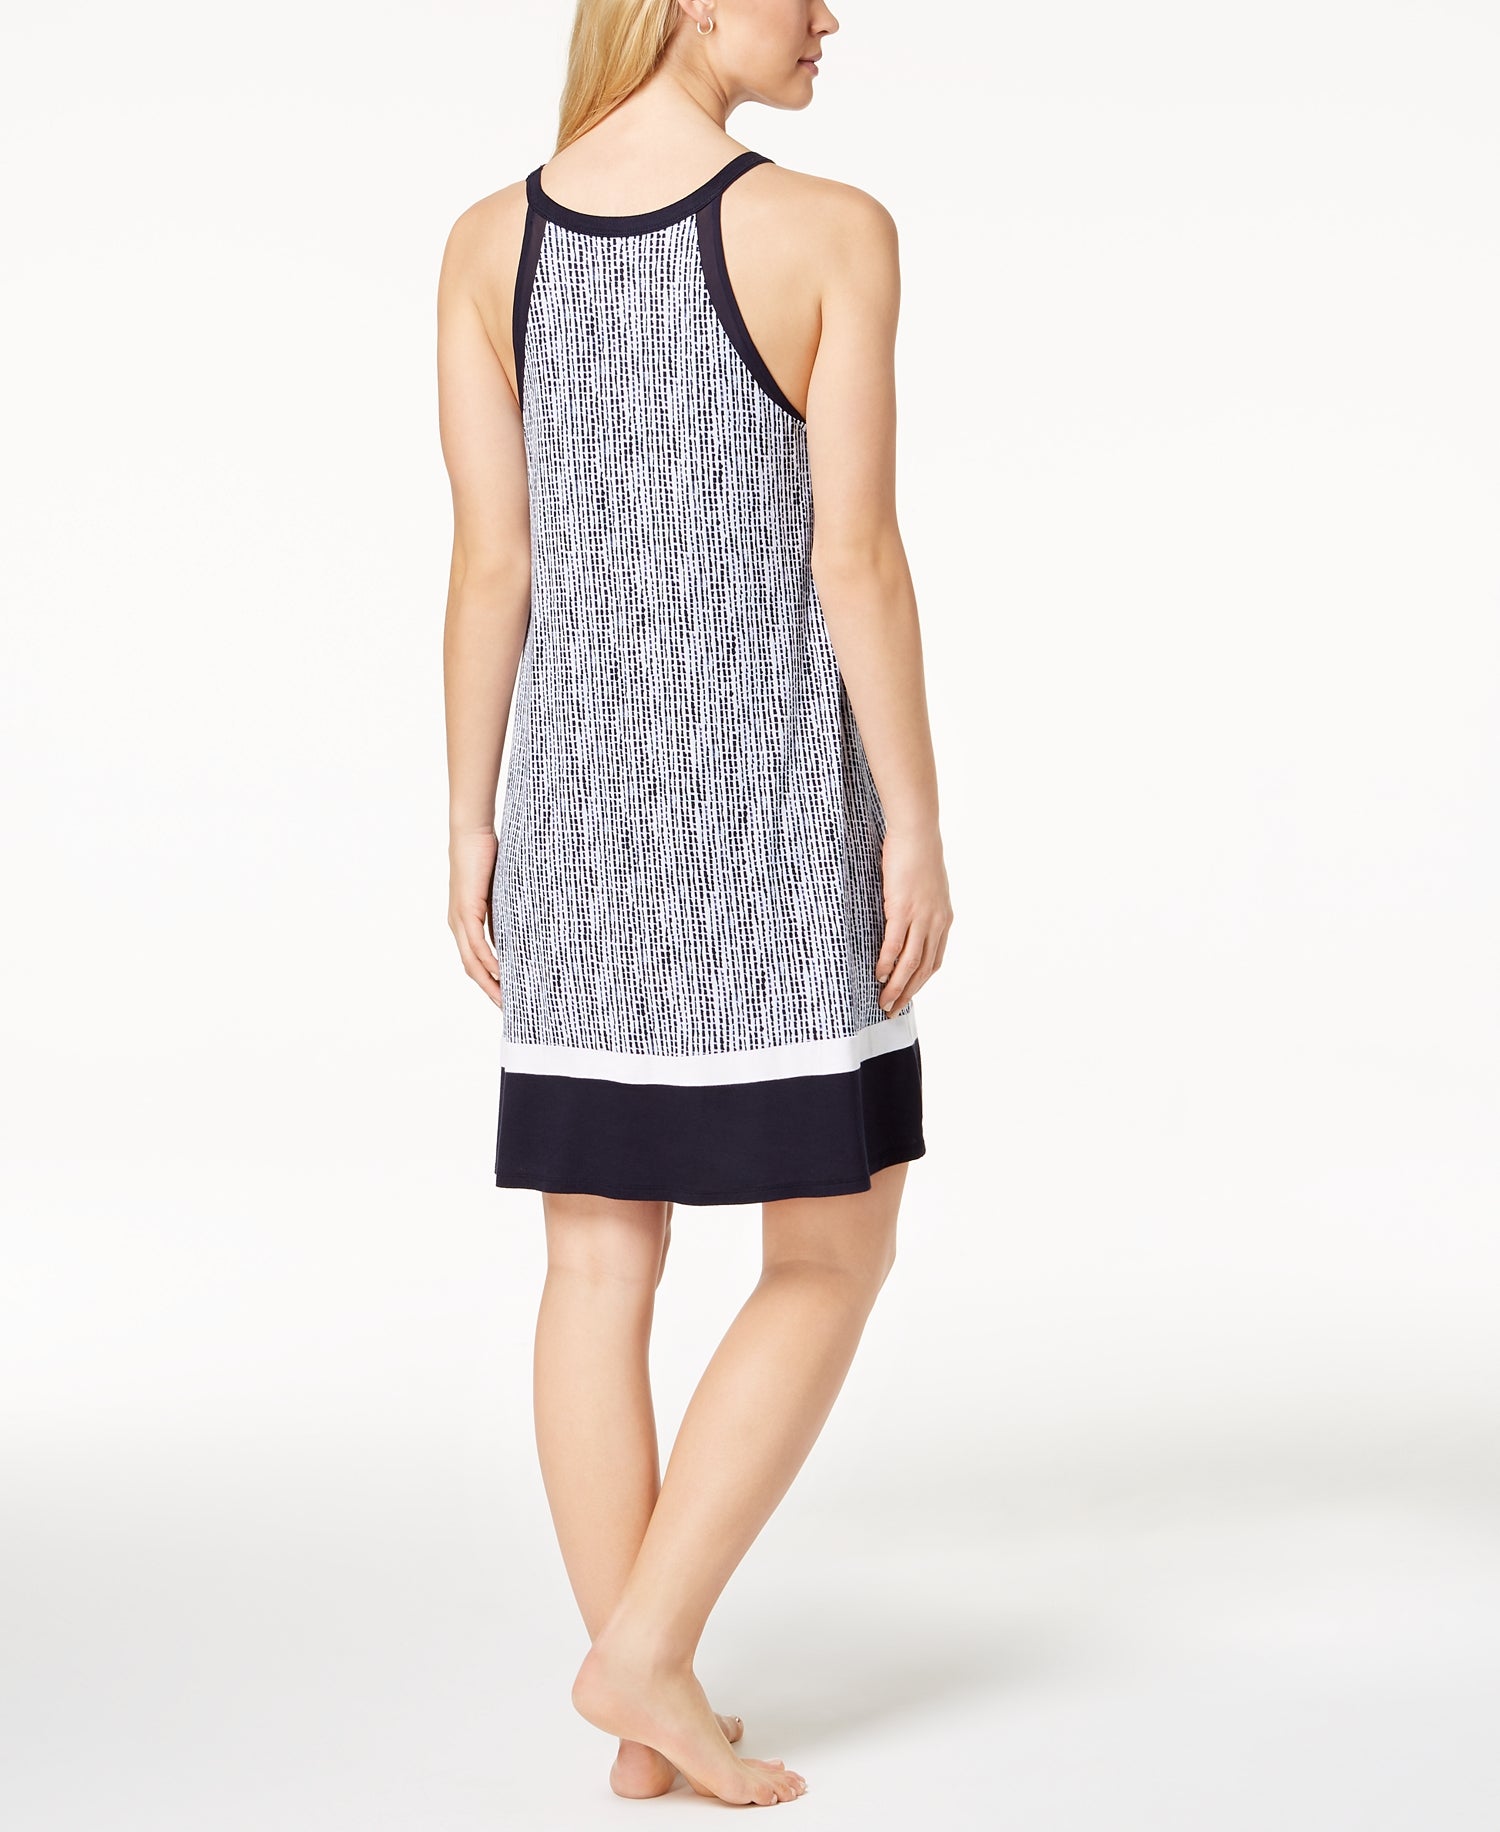 DKNY Womens Sleeveless Contrast Trim Nightgown